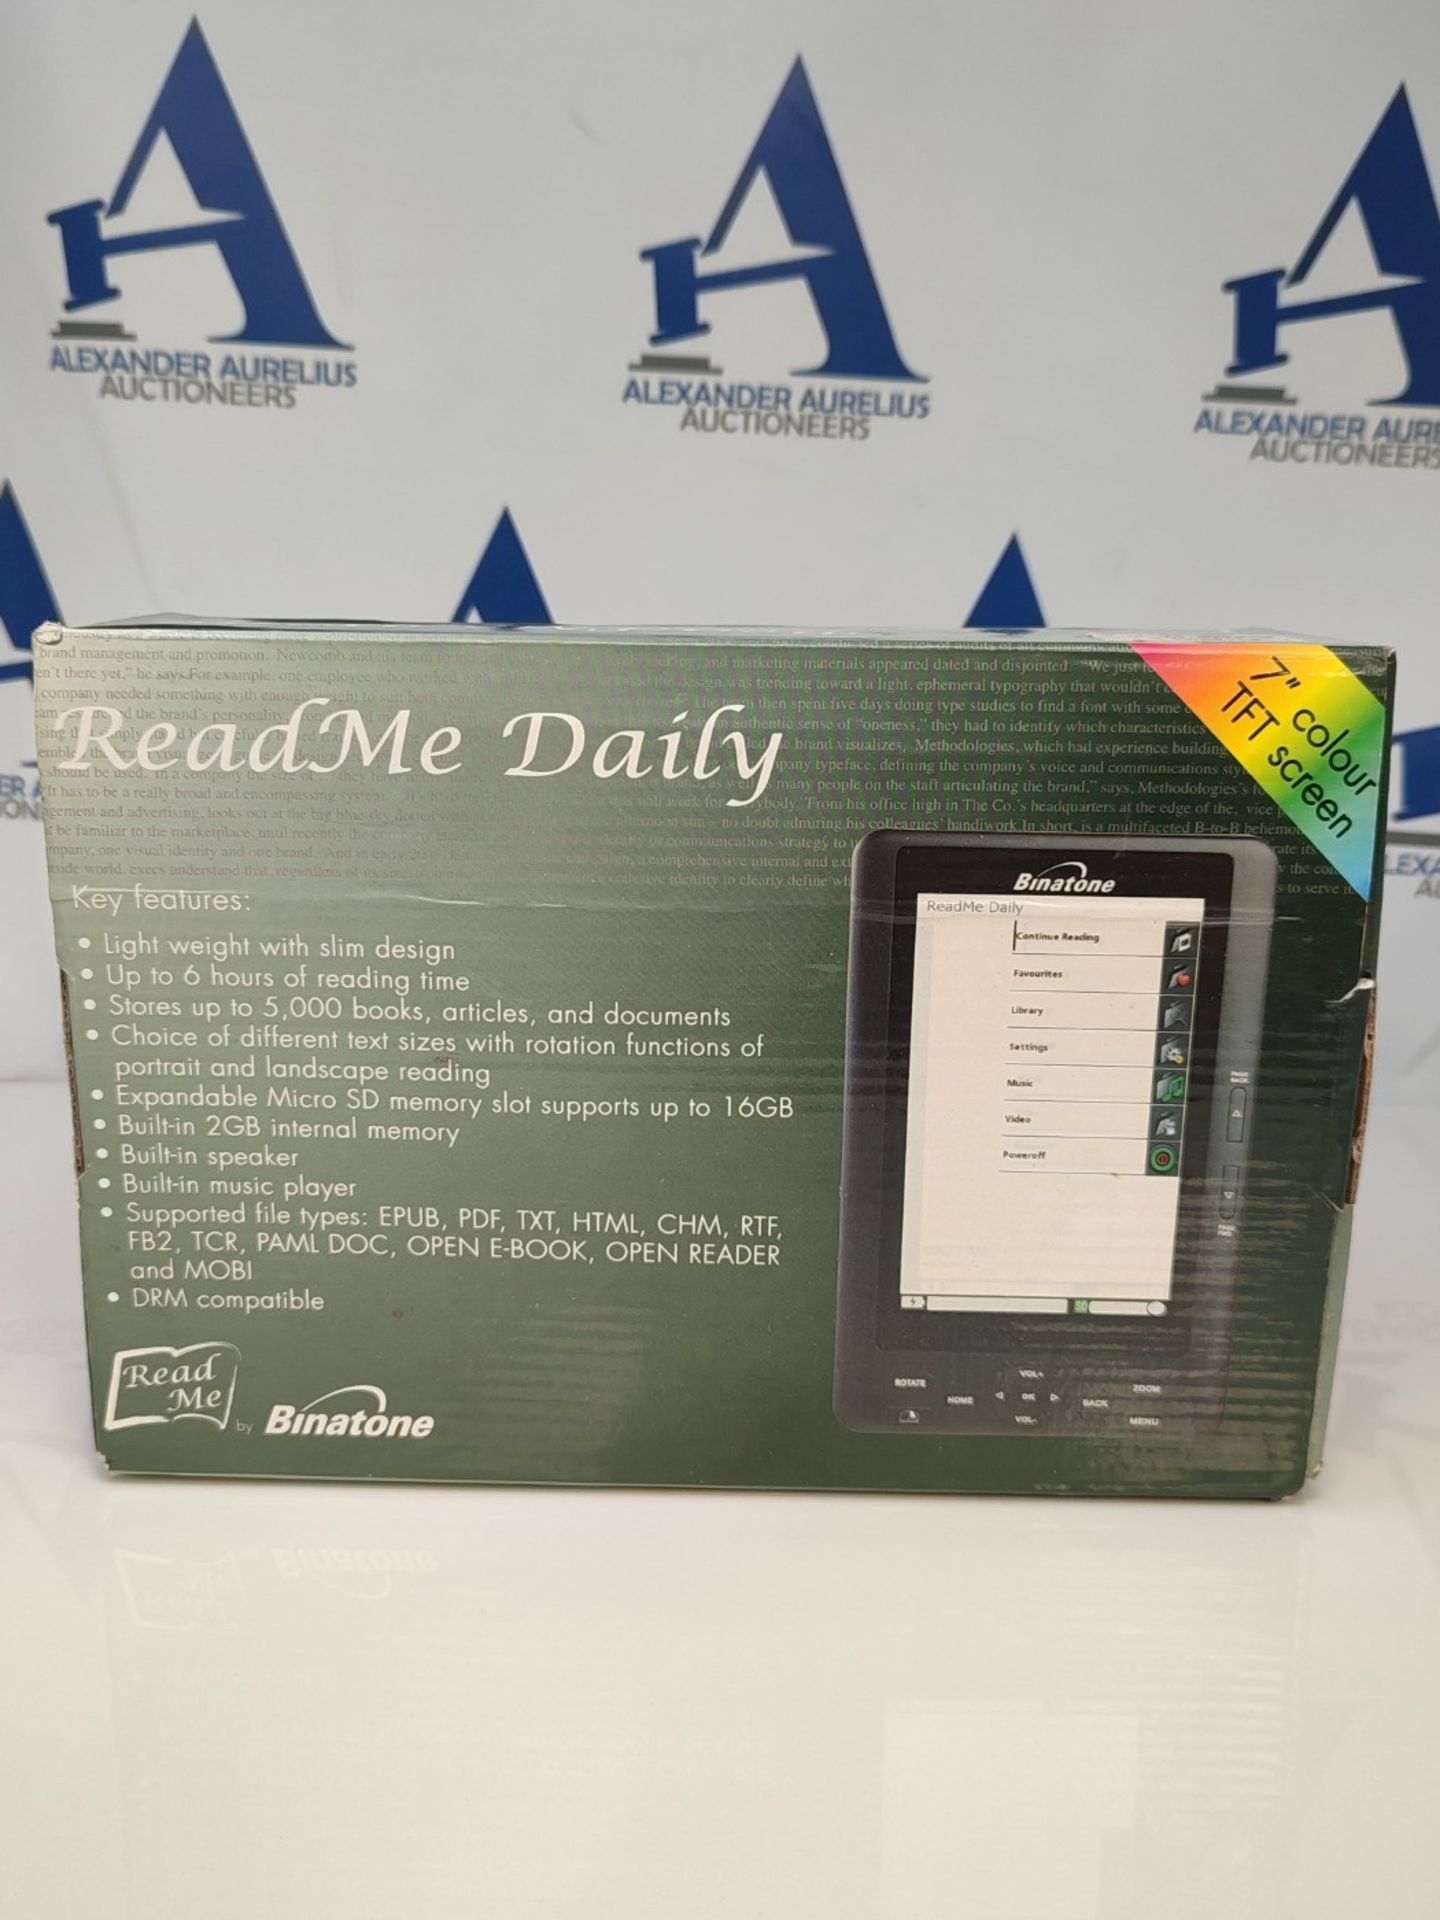 Binatone ReadMe Daily Ebook Reader Model 2282 - Image 2 of 3